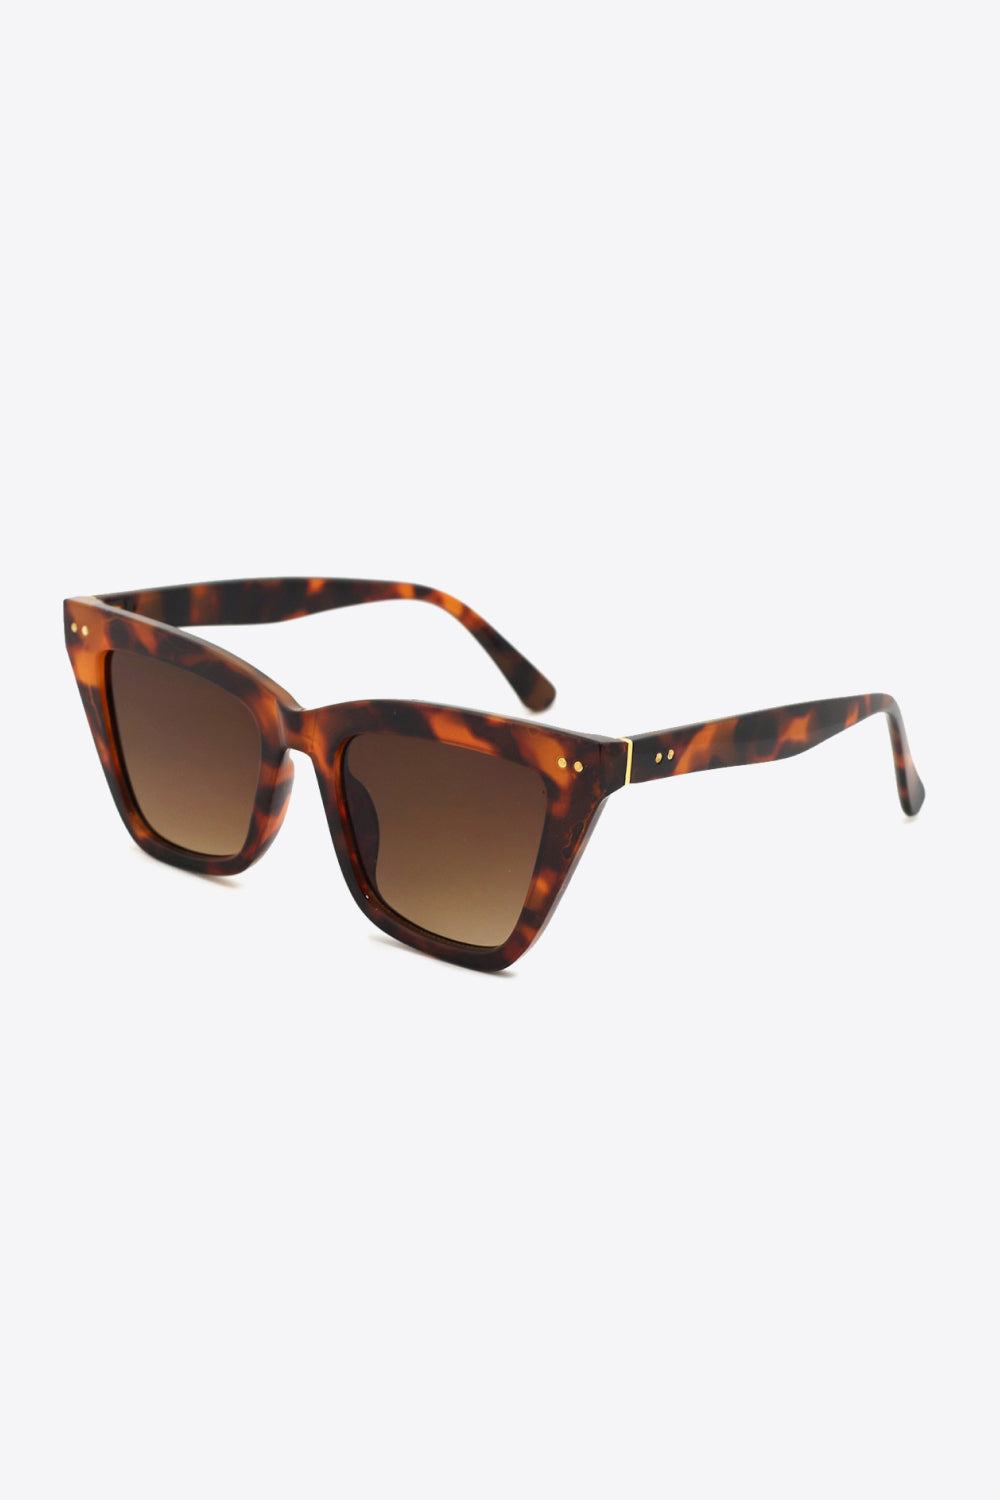 Charm School Wayfarer UV400 Sunglasses in Apricot and Tortoiseshell